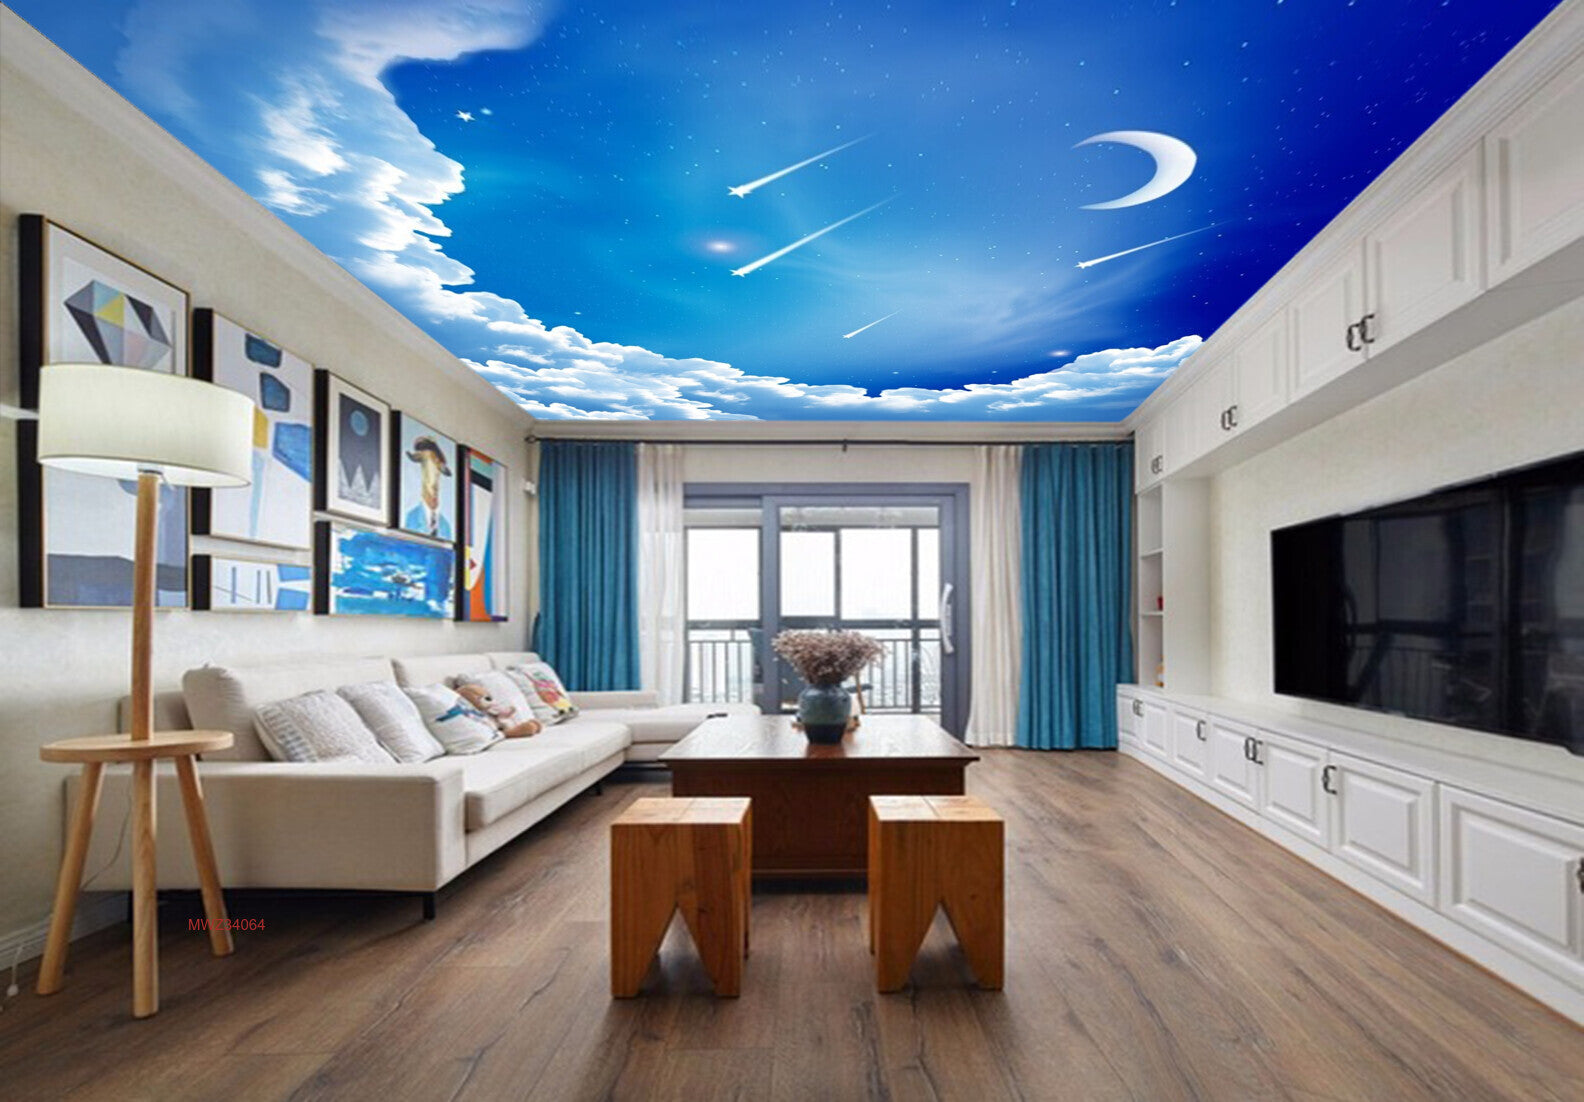 Avikalp MWZ3406 Clouds Moon Stars HD Wallpaper for Ceiling